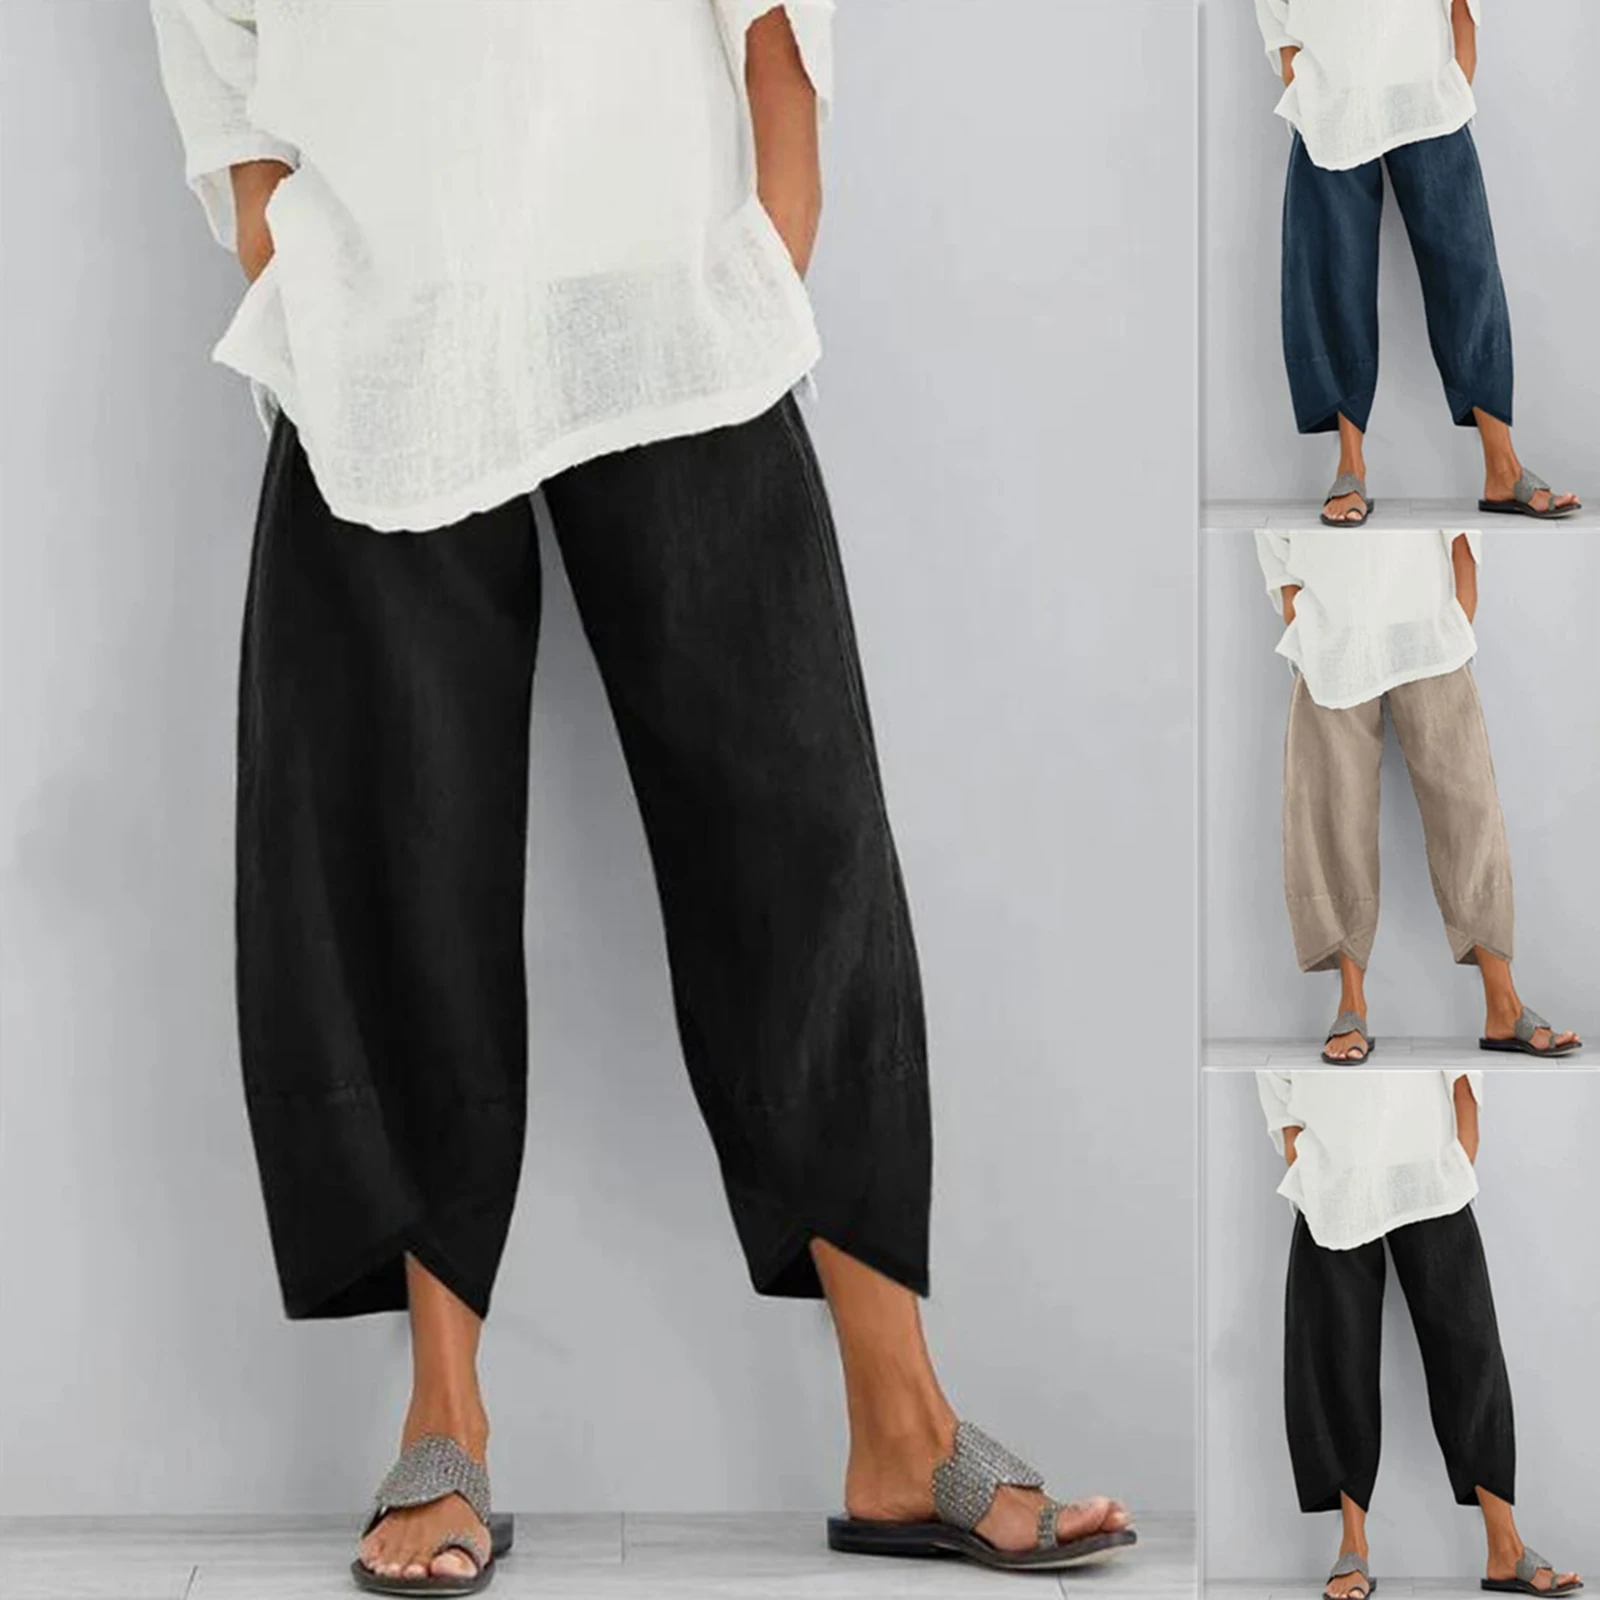 Capri Women's Linen Pants for Women Lounge Pants High Waist Casual Outfits Summer Loose Fit Sweatpants Trousers Streetwear